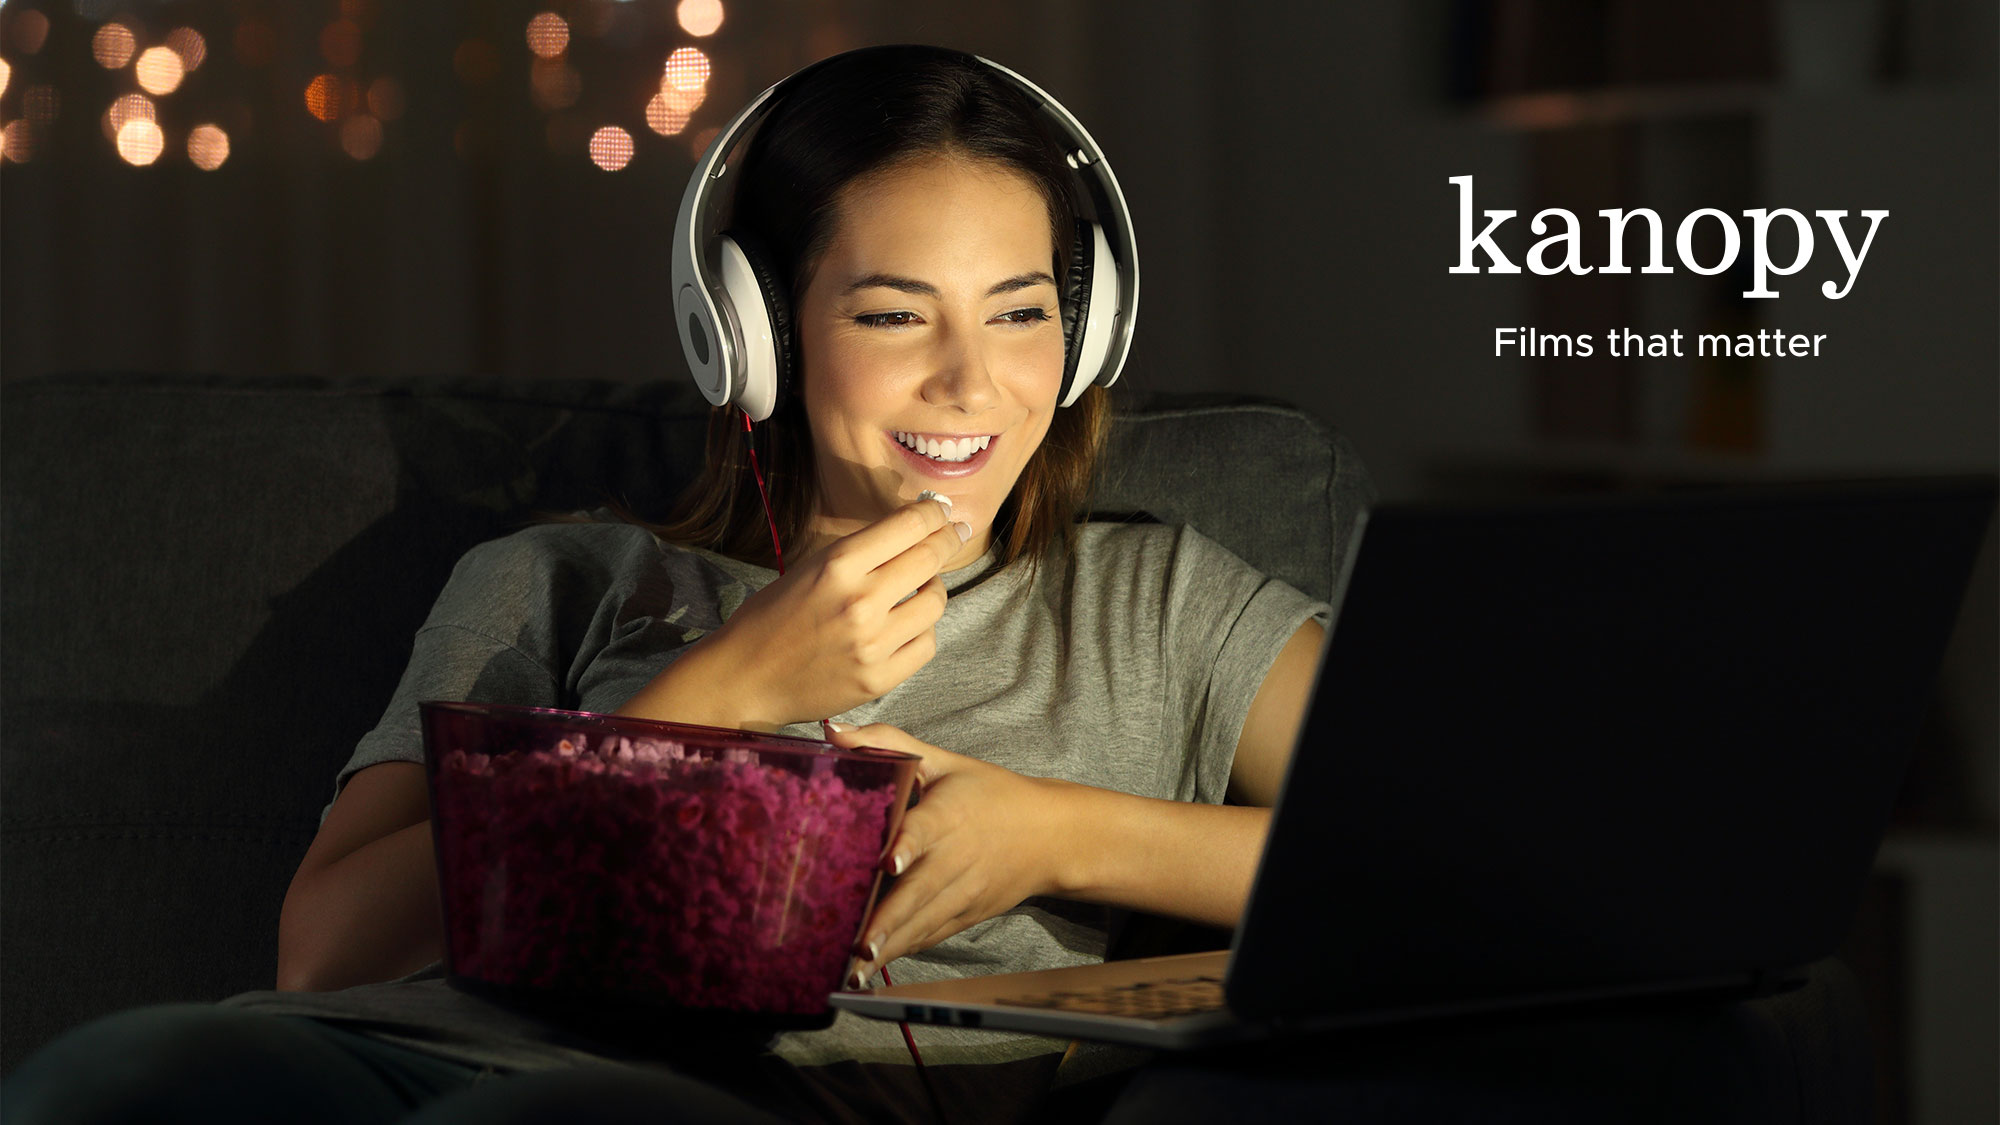 A woman enjoys streaming a movie on Kanopy